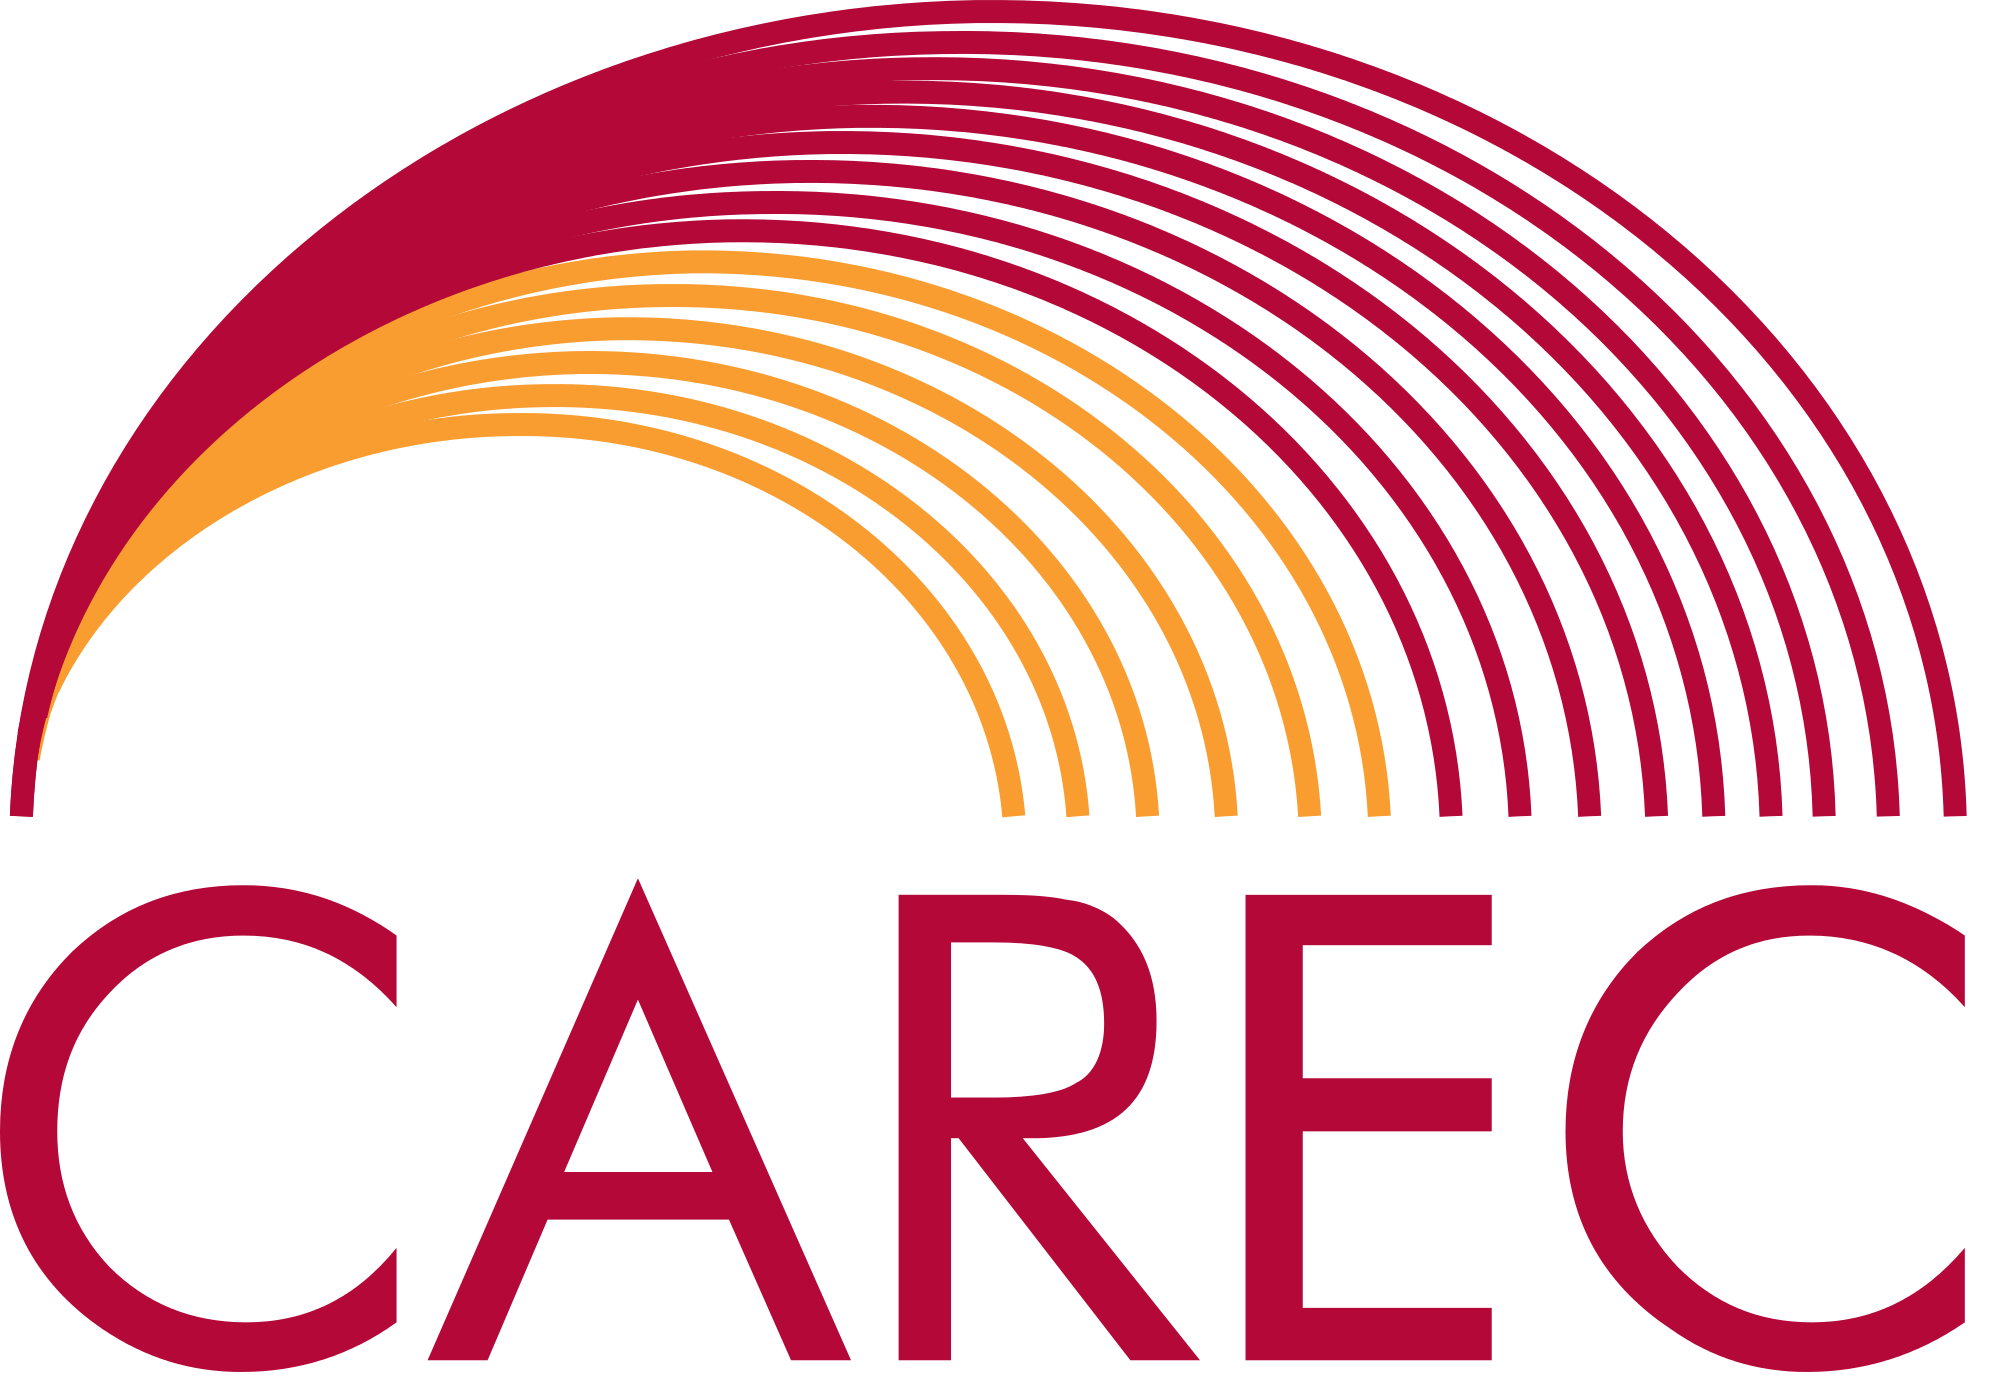 CAREC_logo.svg